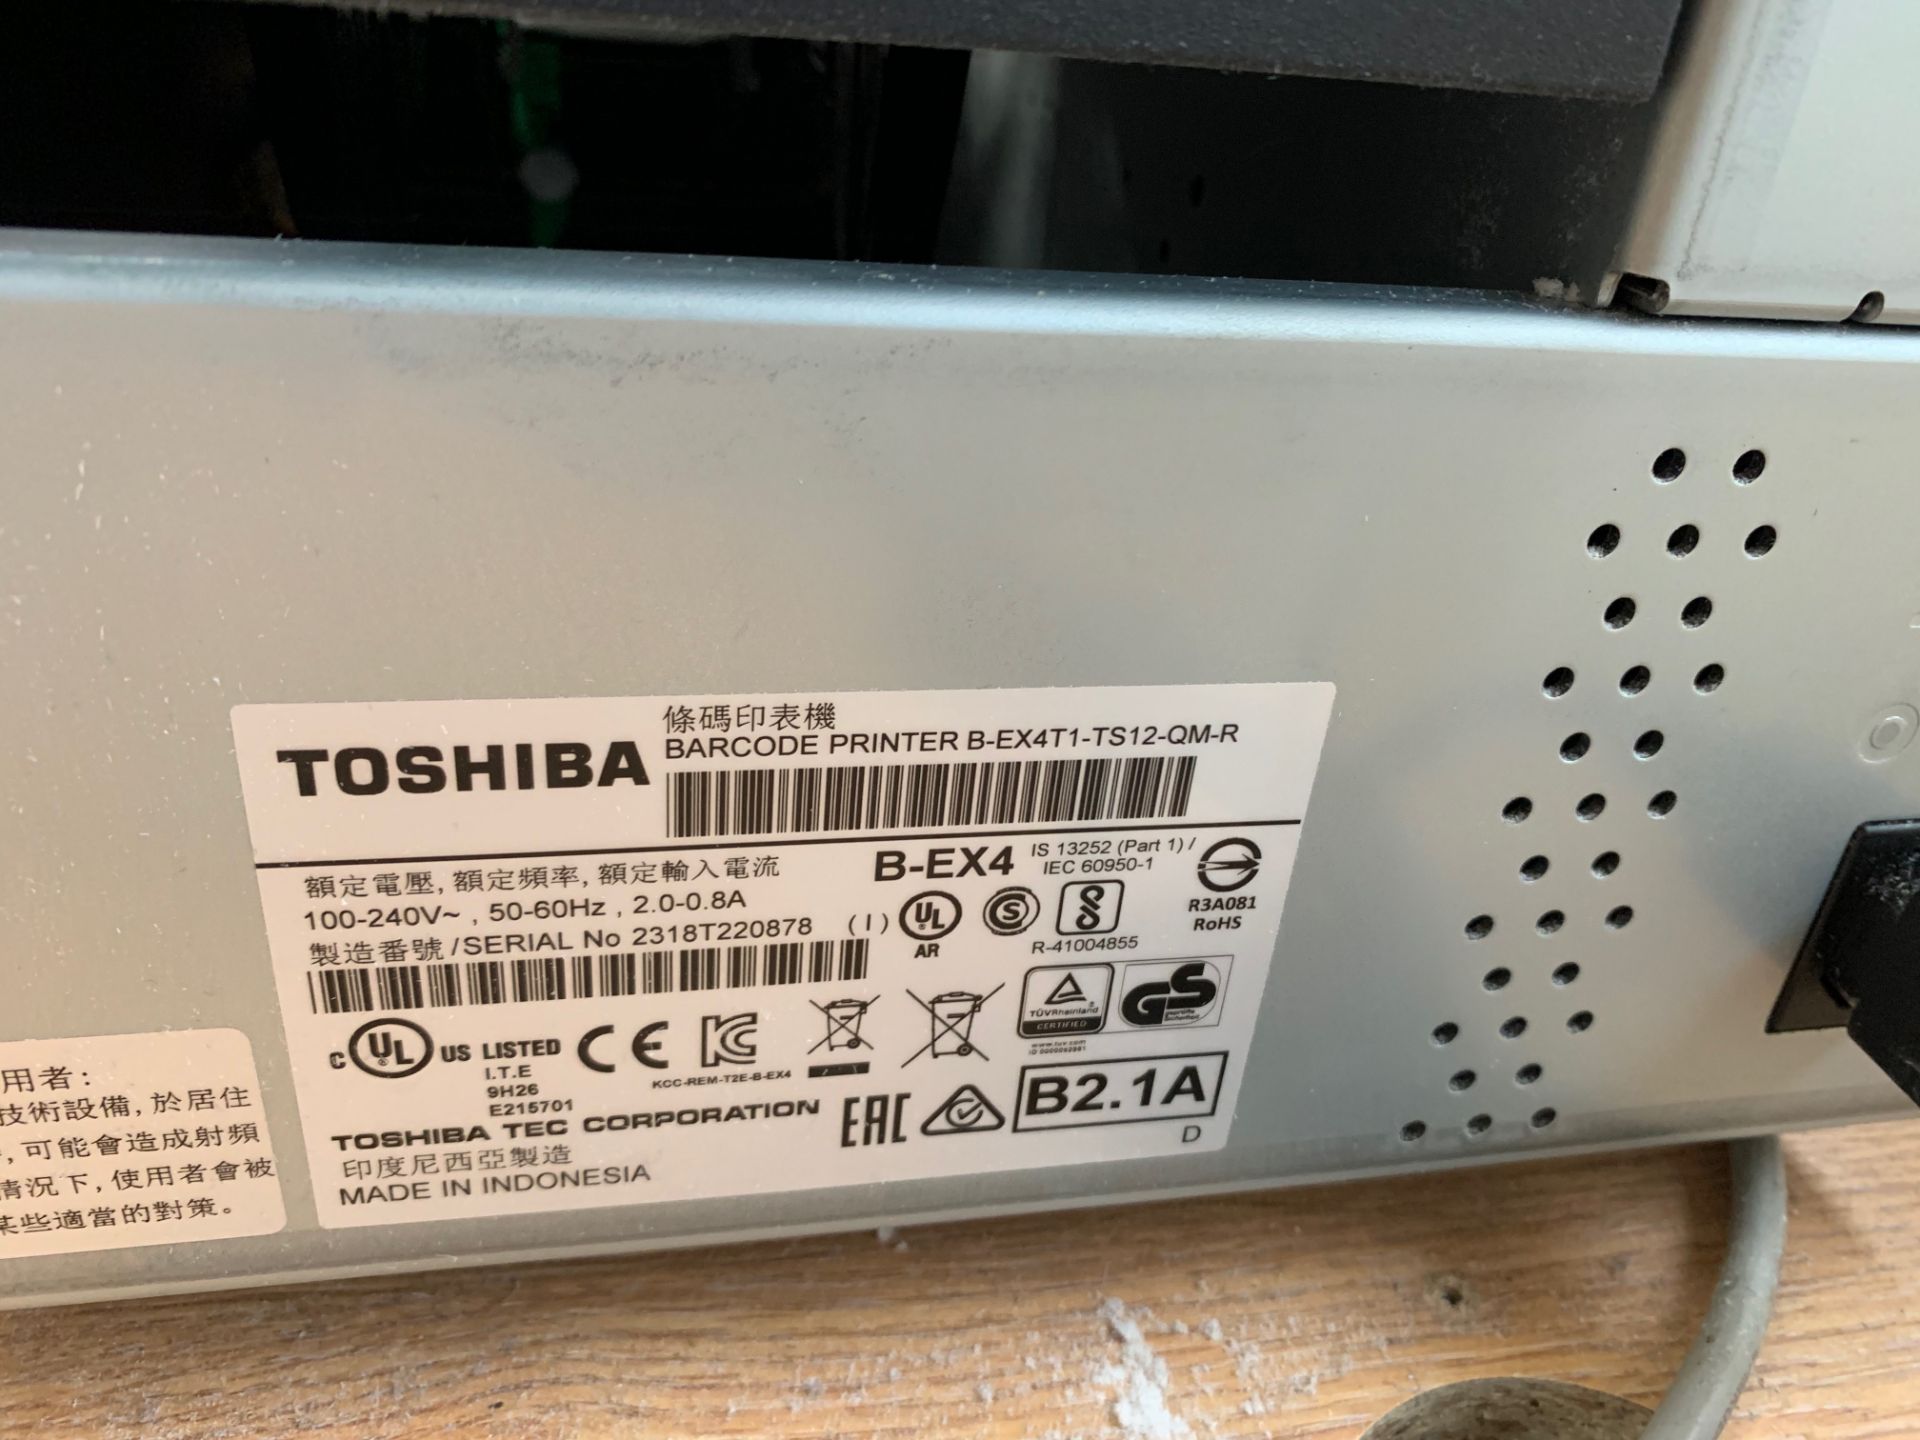 Toshiba Barcode Printer B-EX4 - Image 2 of 2